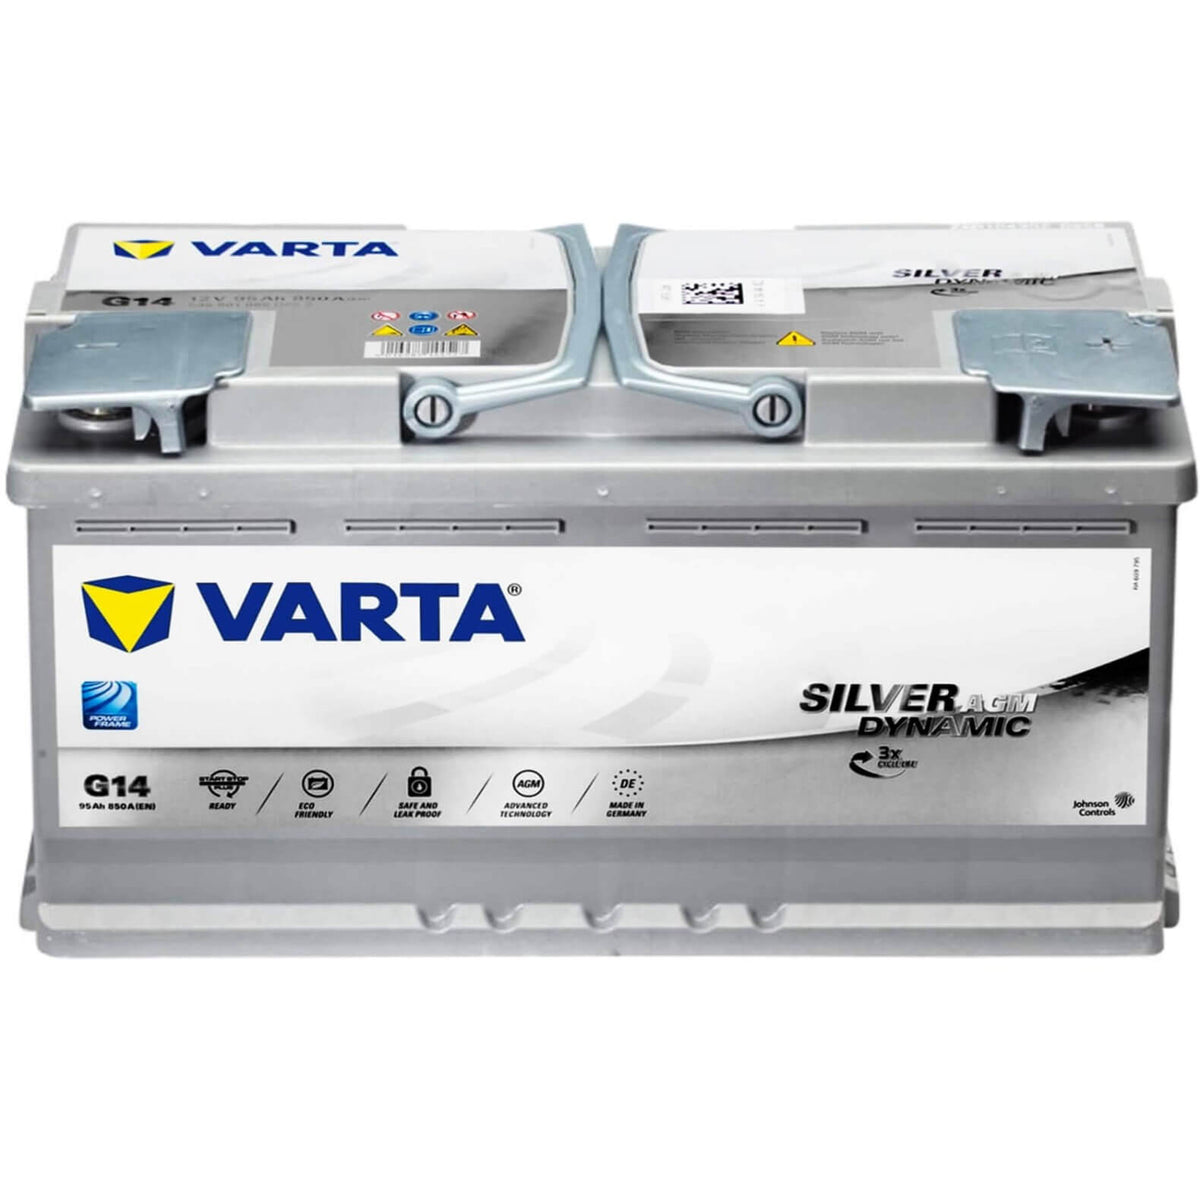 595901085D852 VARTA SILVER dynamic G14 G14 Batterie 12V 95Ah 850A